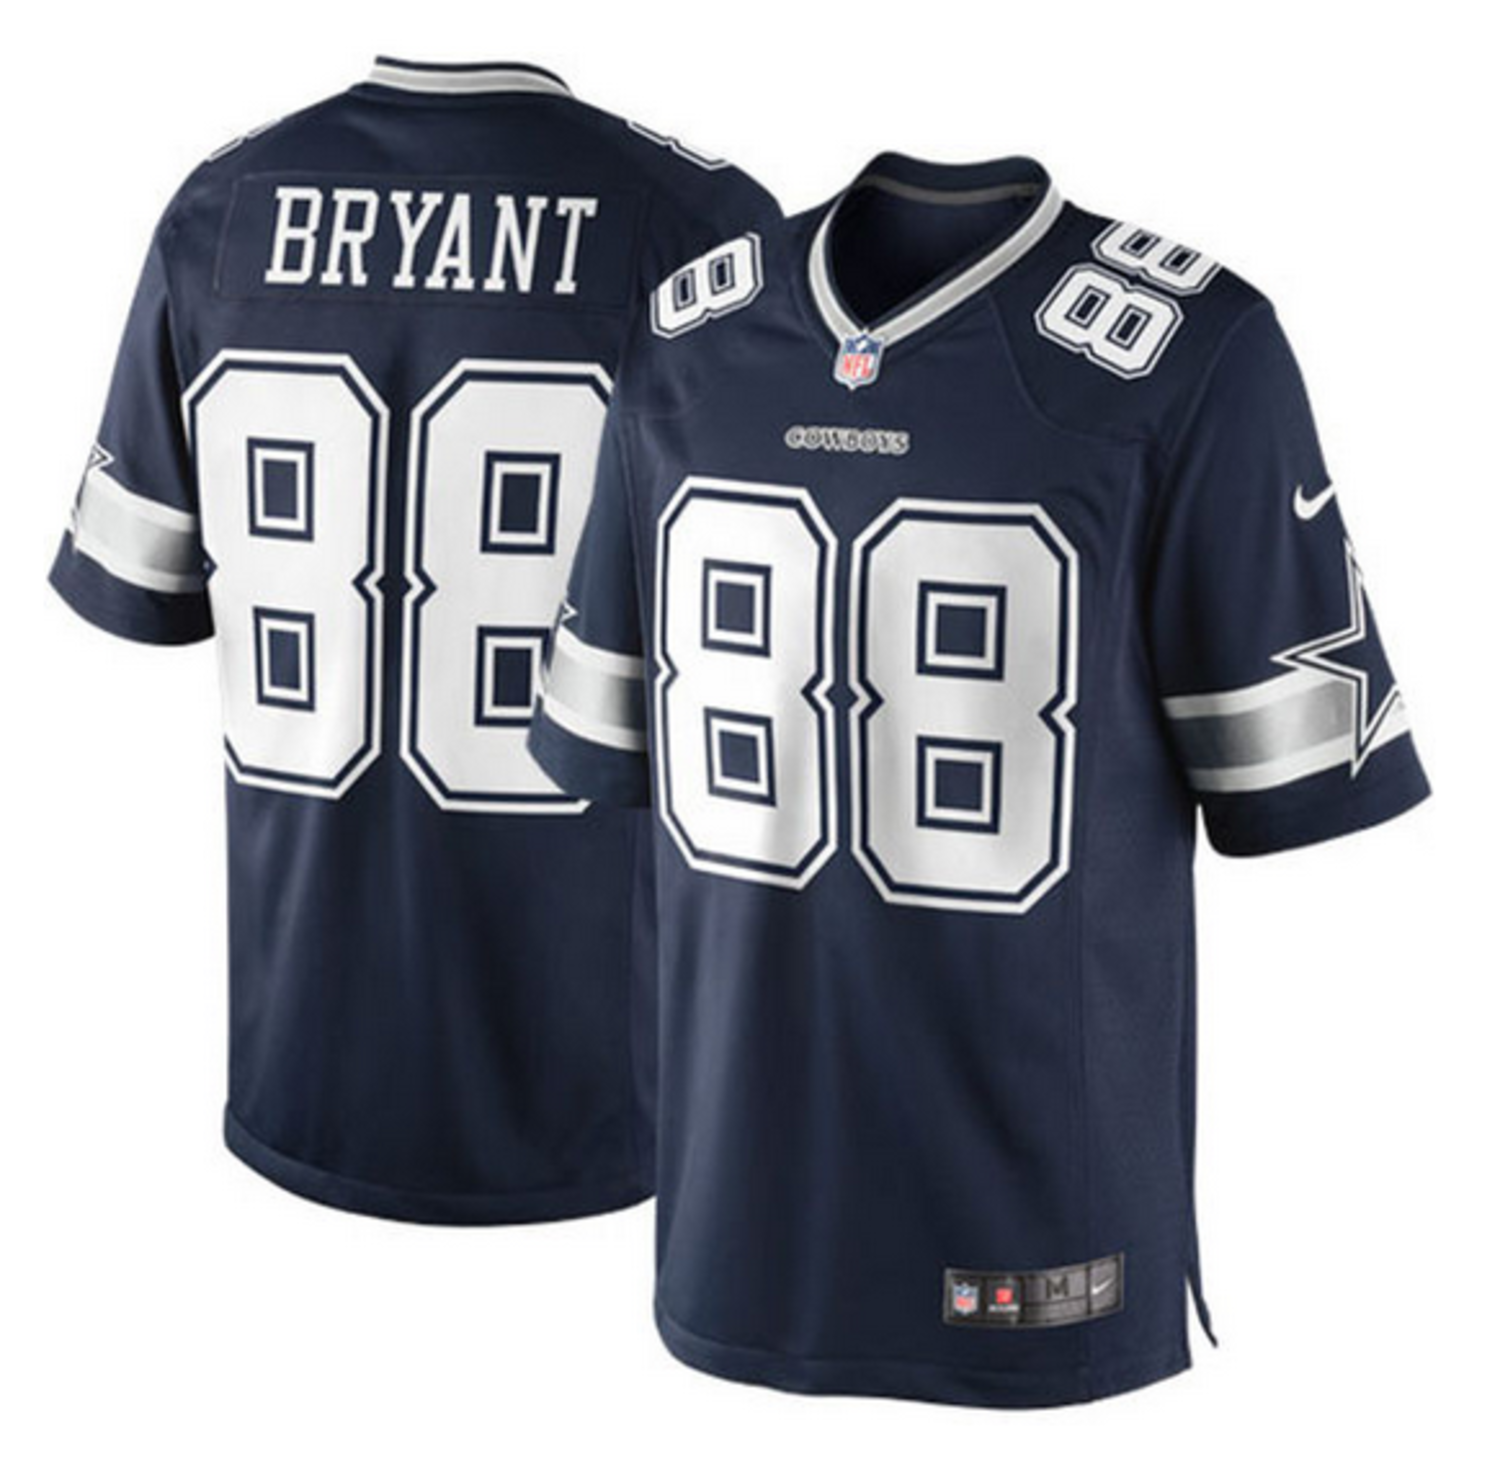 Nike NFL Dallas Cowboys M Nike Dez Bryant #88 Limited Jersey Navy